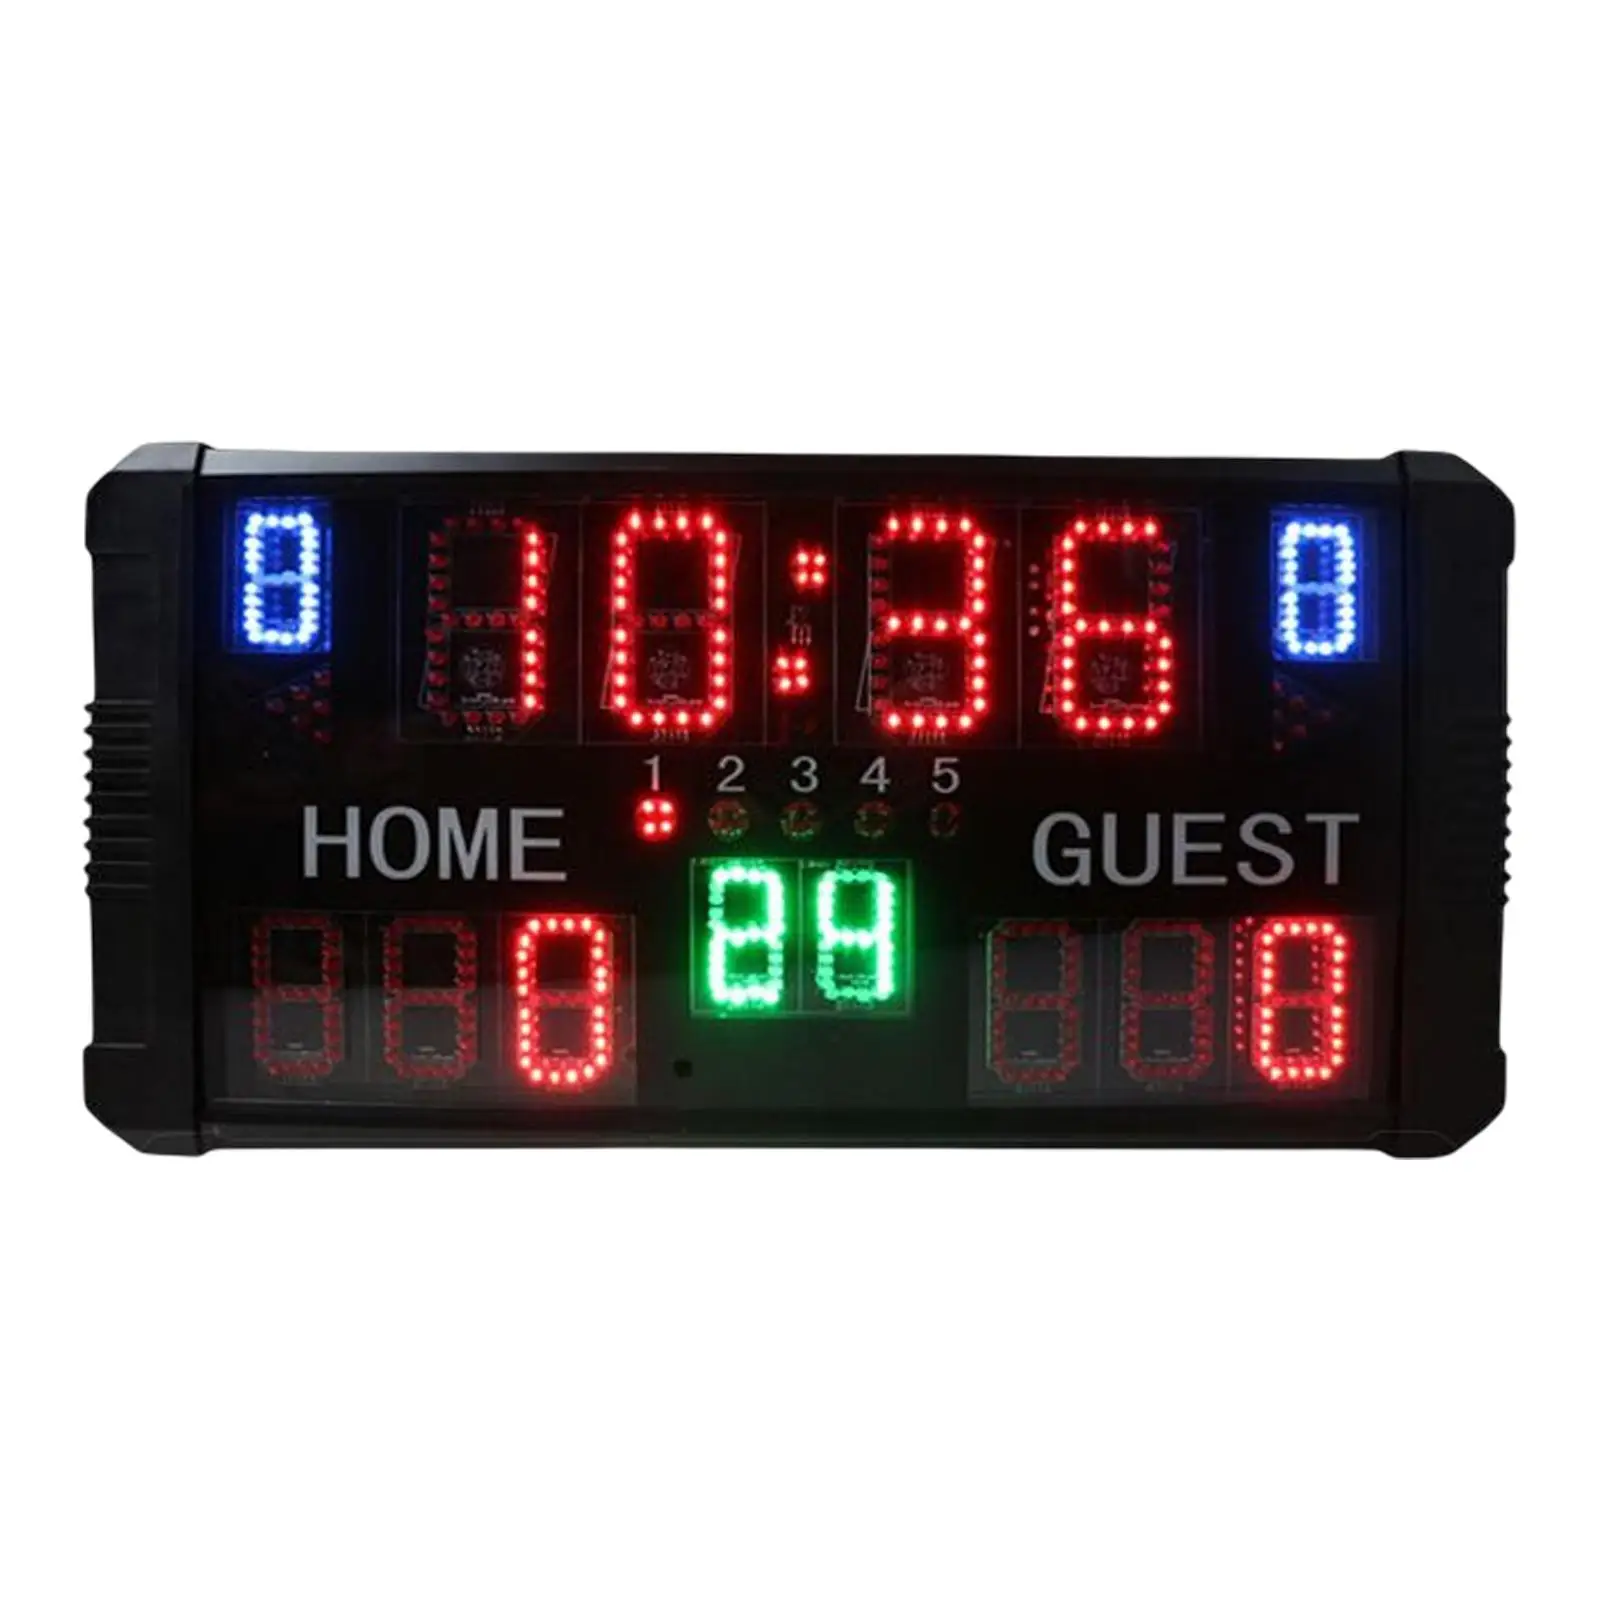 Multifunctional Electronic Digital Scoreboard Remote Control Score Wall Mount Innings Indoor Basketball Scoreboard for Boxing